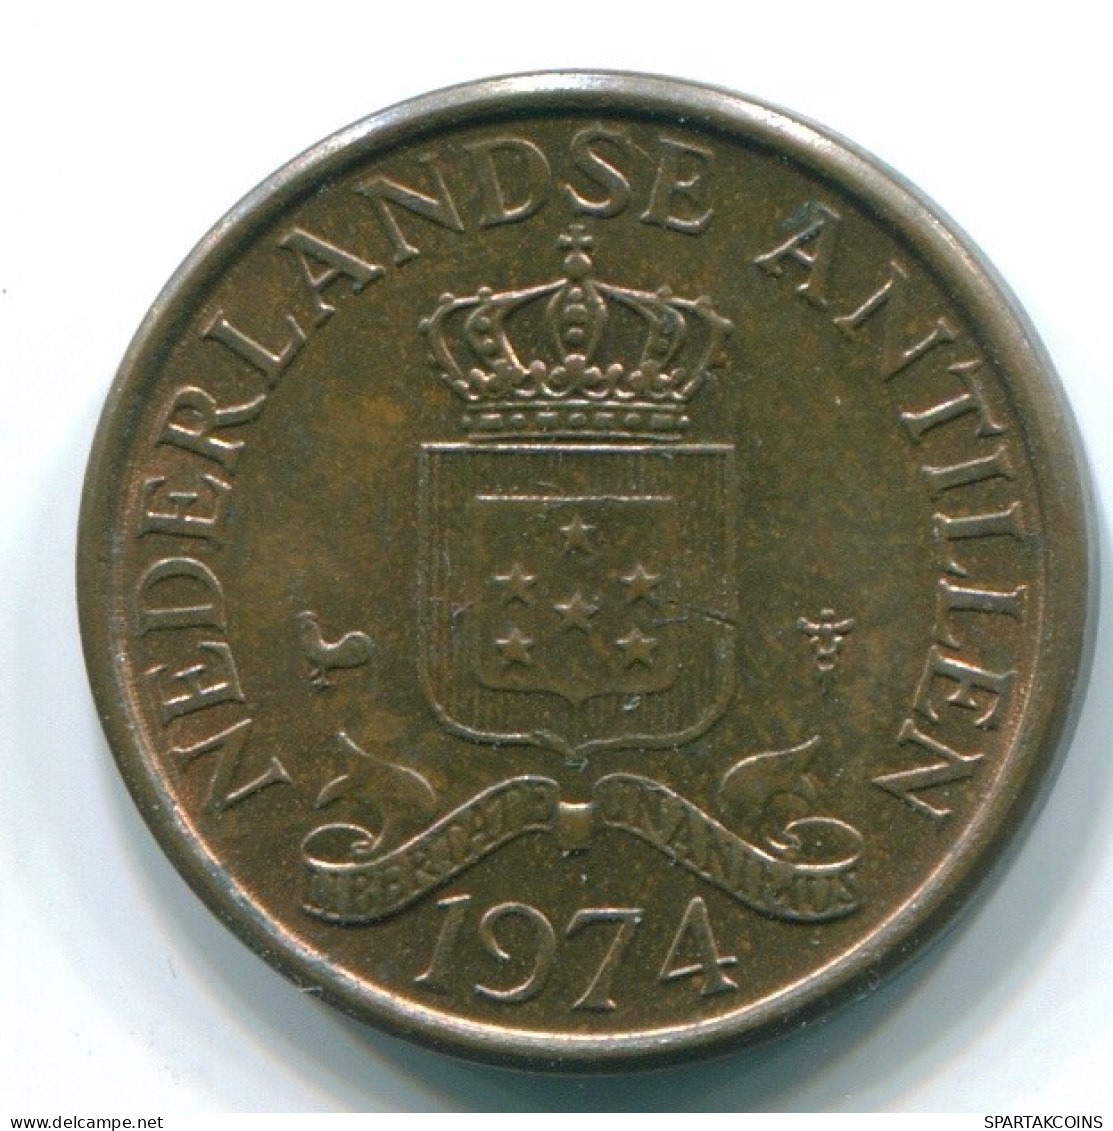 1 CENT 1974 NIEDERLÄNDISCHE ANTILLEN Bronze Koloniale Münze #S10662.D.A - Antilles Néerlandaises